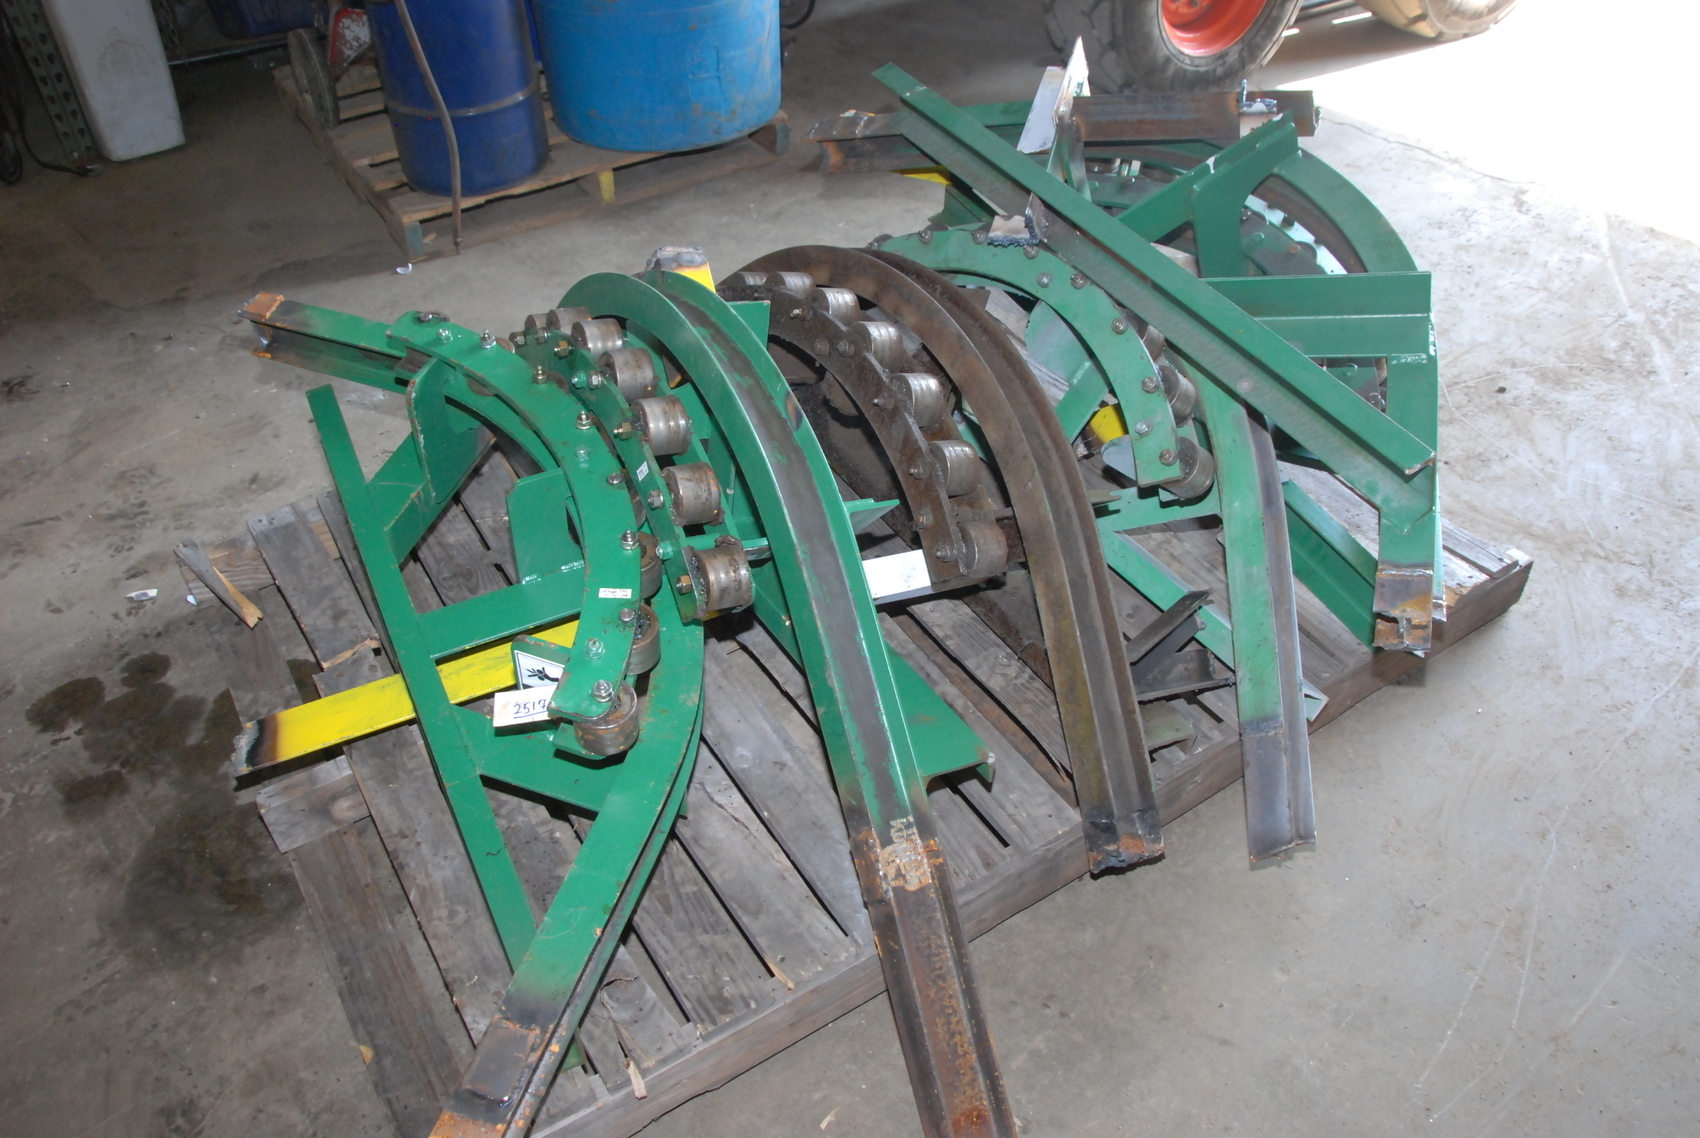 Lot of 6 Rapid Industries Conveyor 90 degree roller terns;2.5"I-beam